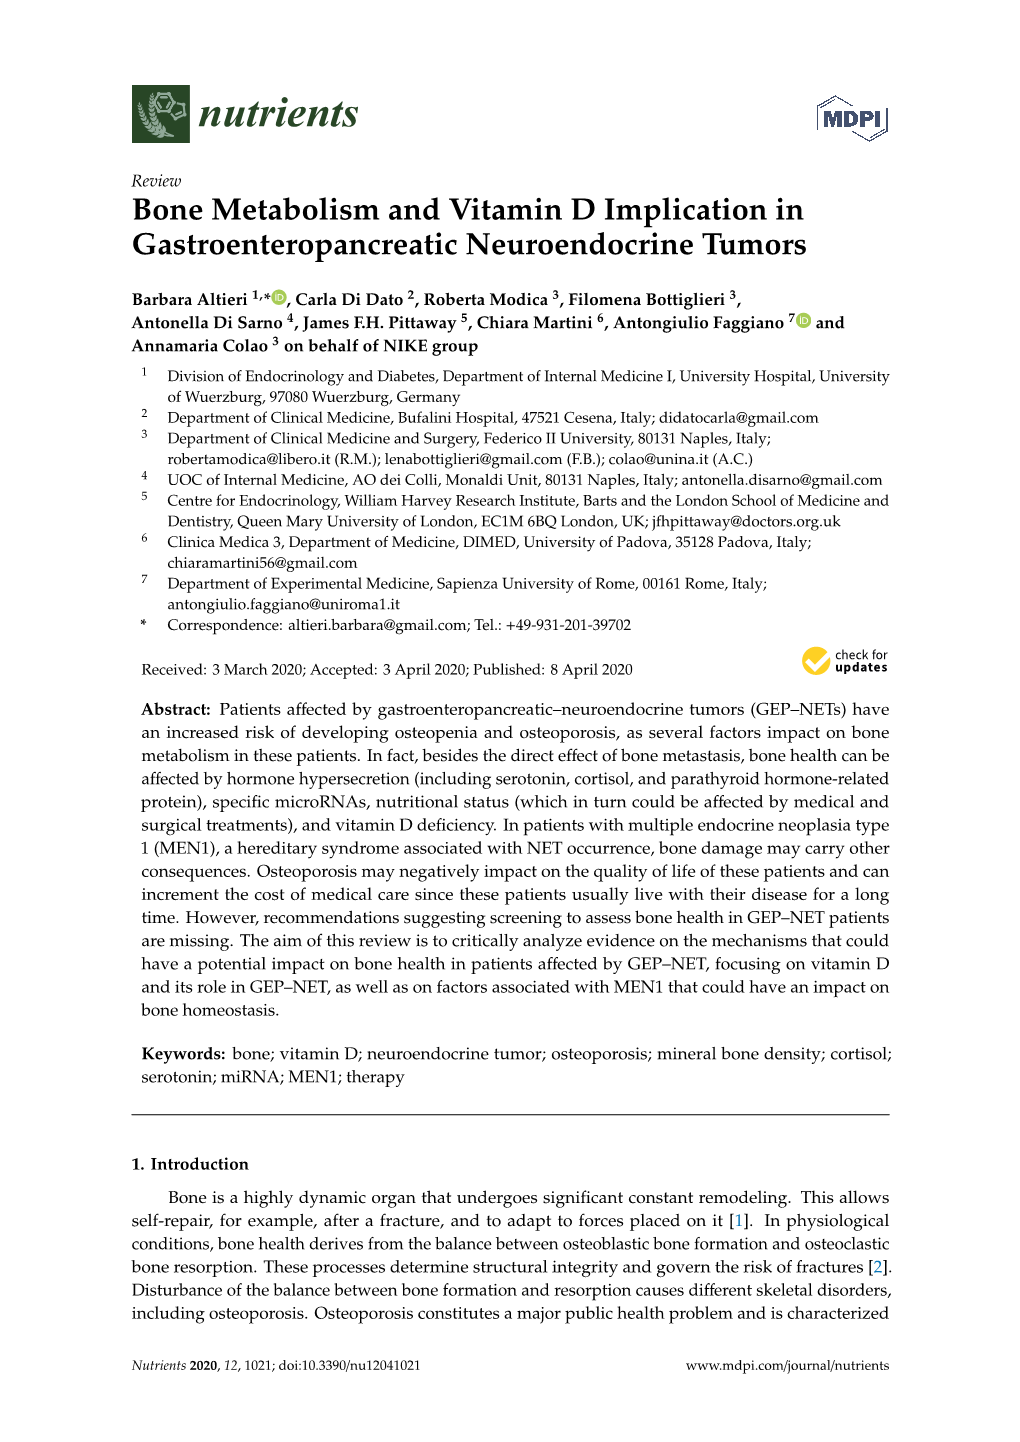 Bone Metabolism and Vitamin D Implication in Gastroenteropancreatic Neuroendocrine Tumors